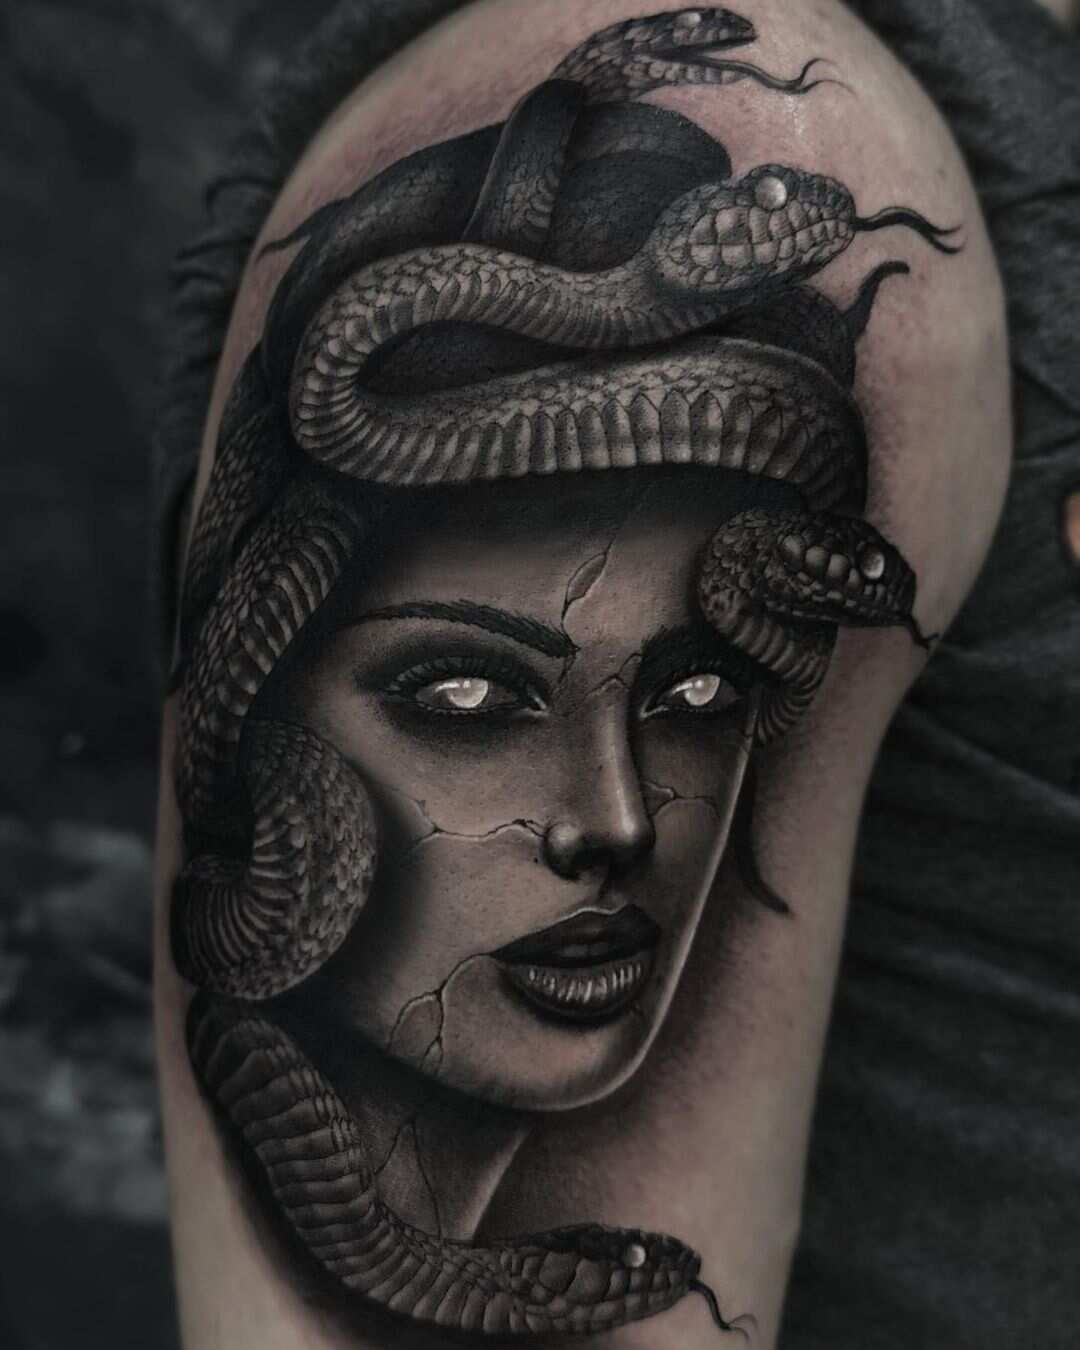 juju:medusa-black-tattoo-blackandgreyrealism-blackandgrey-grey-medusatattoo- medusa-tattoo-snake-snake-tattoo-atlanta-tattooer-gatattooers